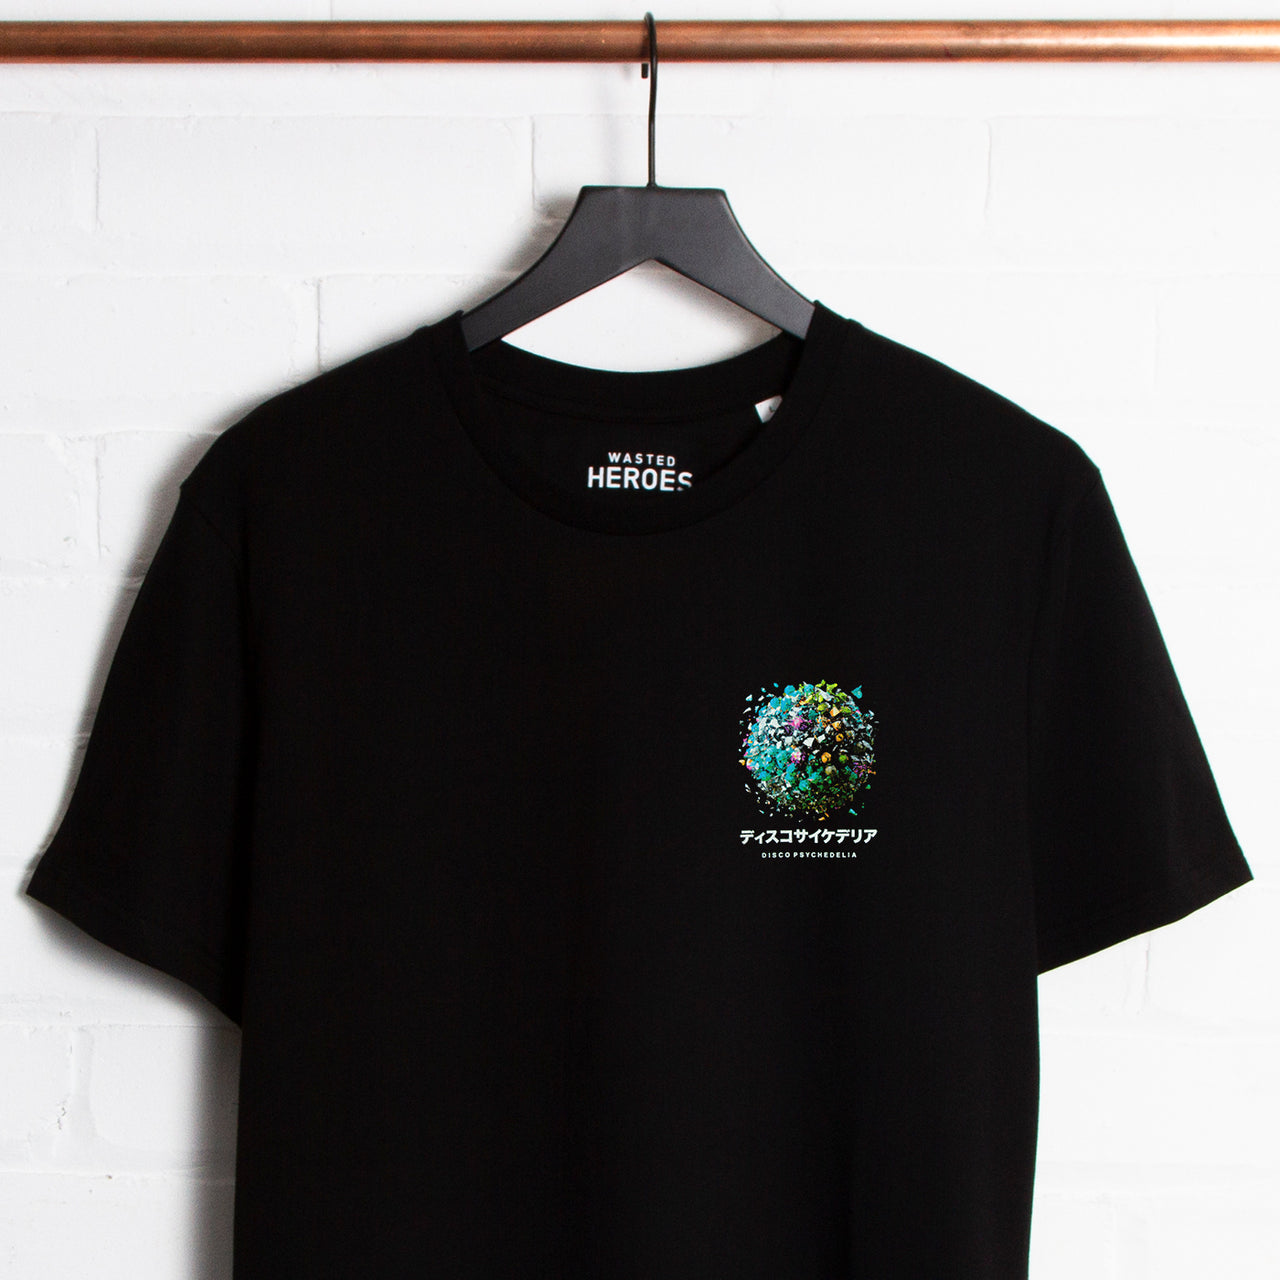 Crest Orb 005 - Tshirt - Black